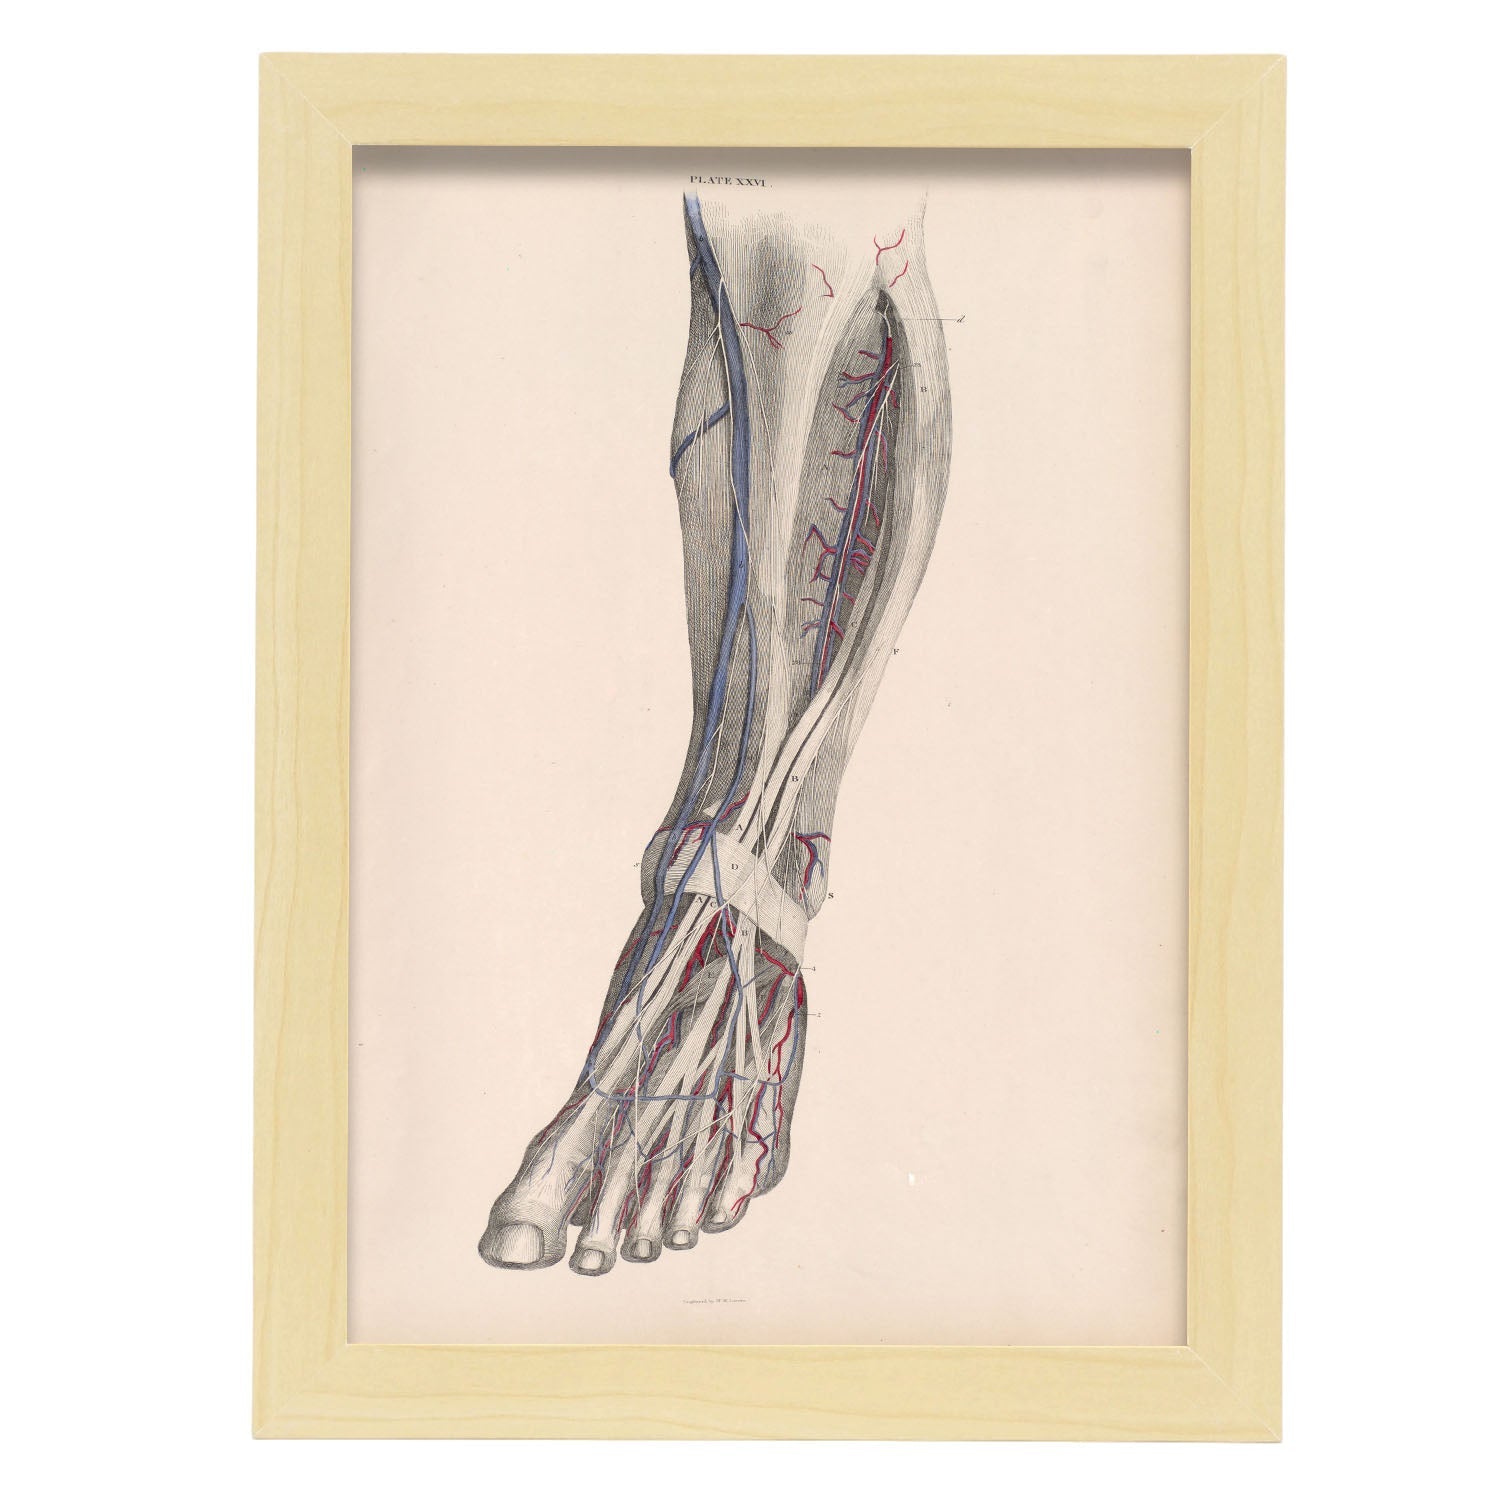 Dissection of the lower leg-Artwork-Nacnic-A4-Marco Madera clara-Nacnic Estudio SL